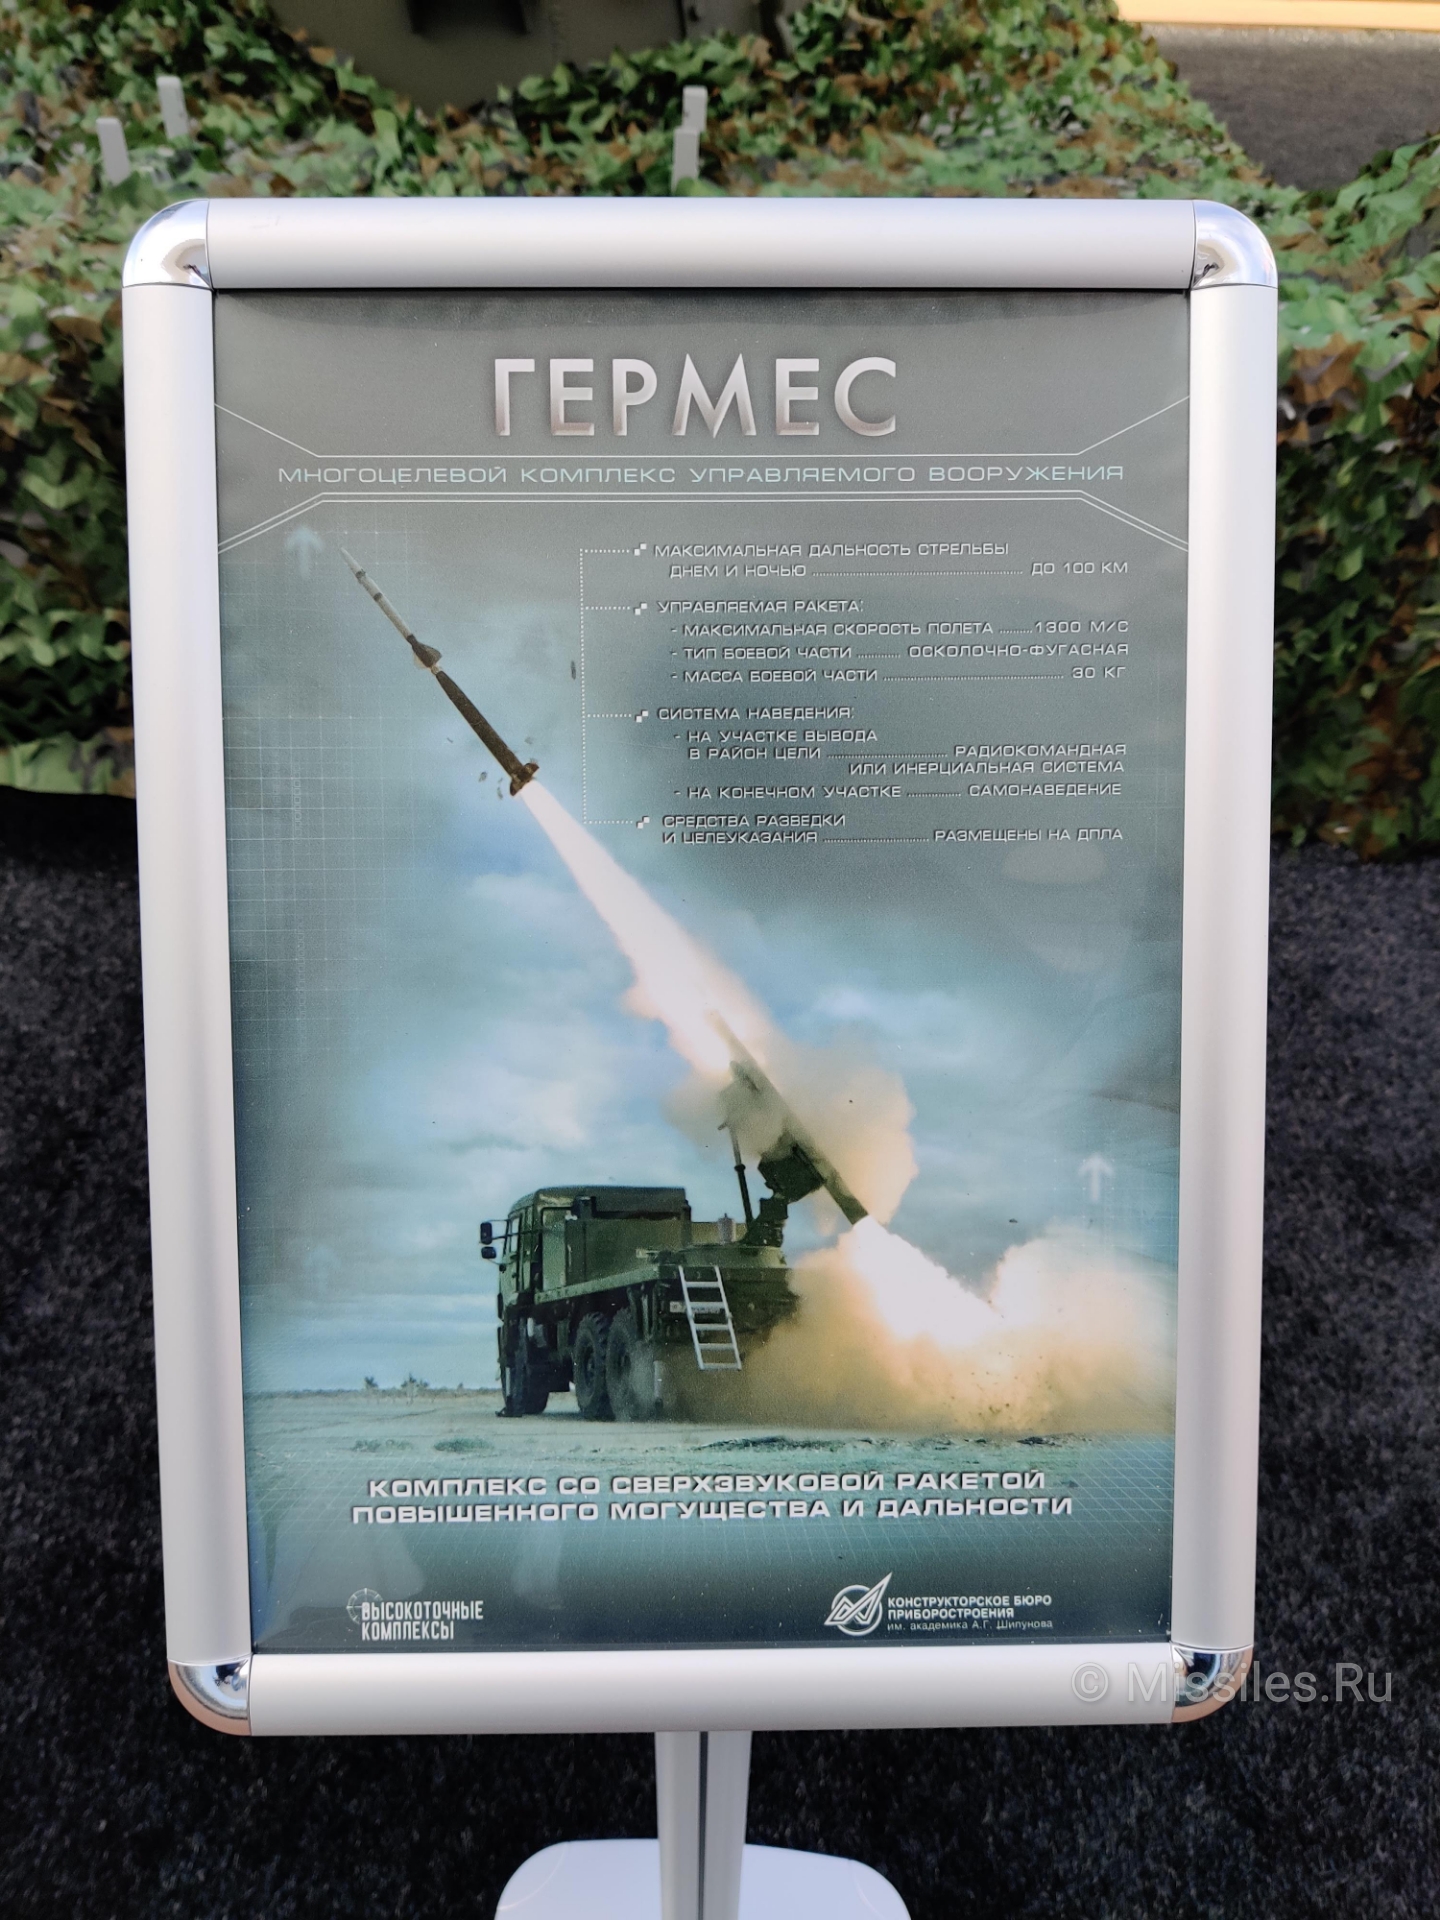 http://missiles.ru/wp-content/uploads/2020/08/tmp_20200825105125_wm.jpg